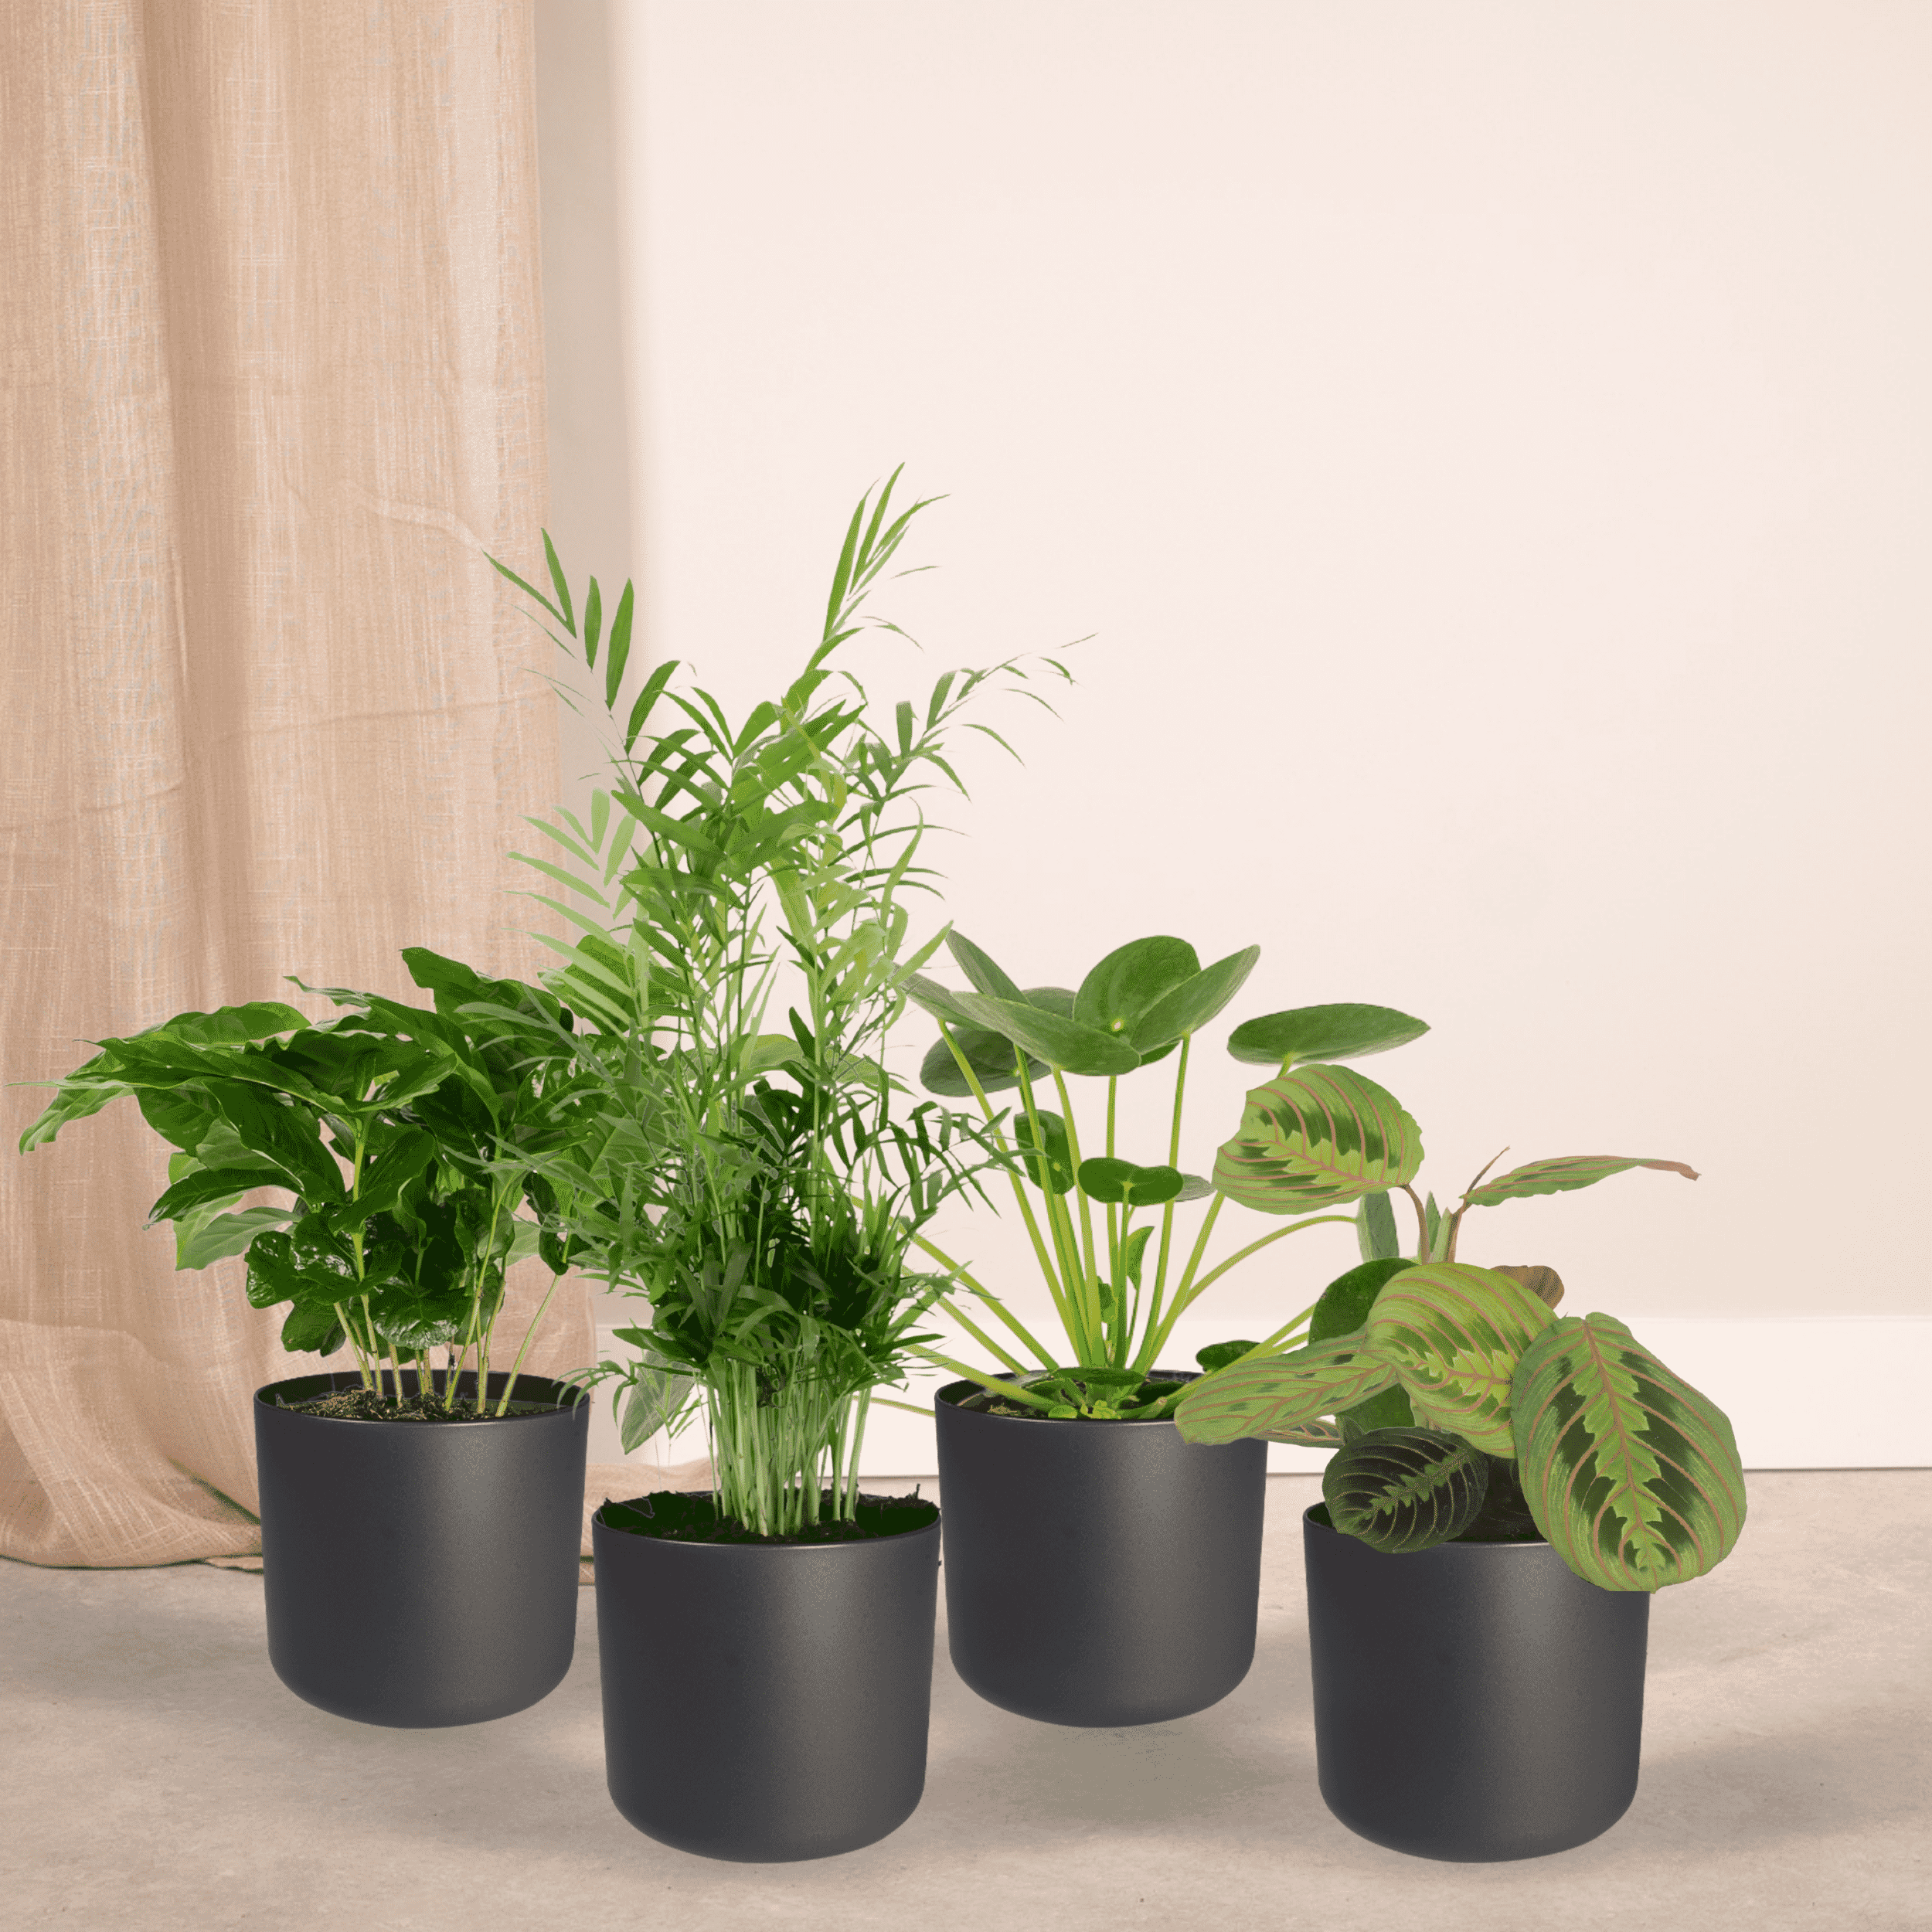 Everspring Diervriendelijke plantenbox Chamaedorea Elegans/Pilea Peperomiodes/Maranta Fascinator/Coffea Arabica Set van 4 stuks - Groen